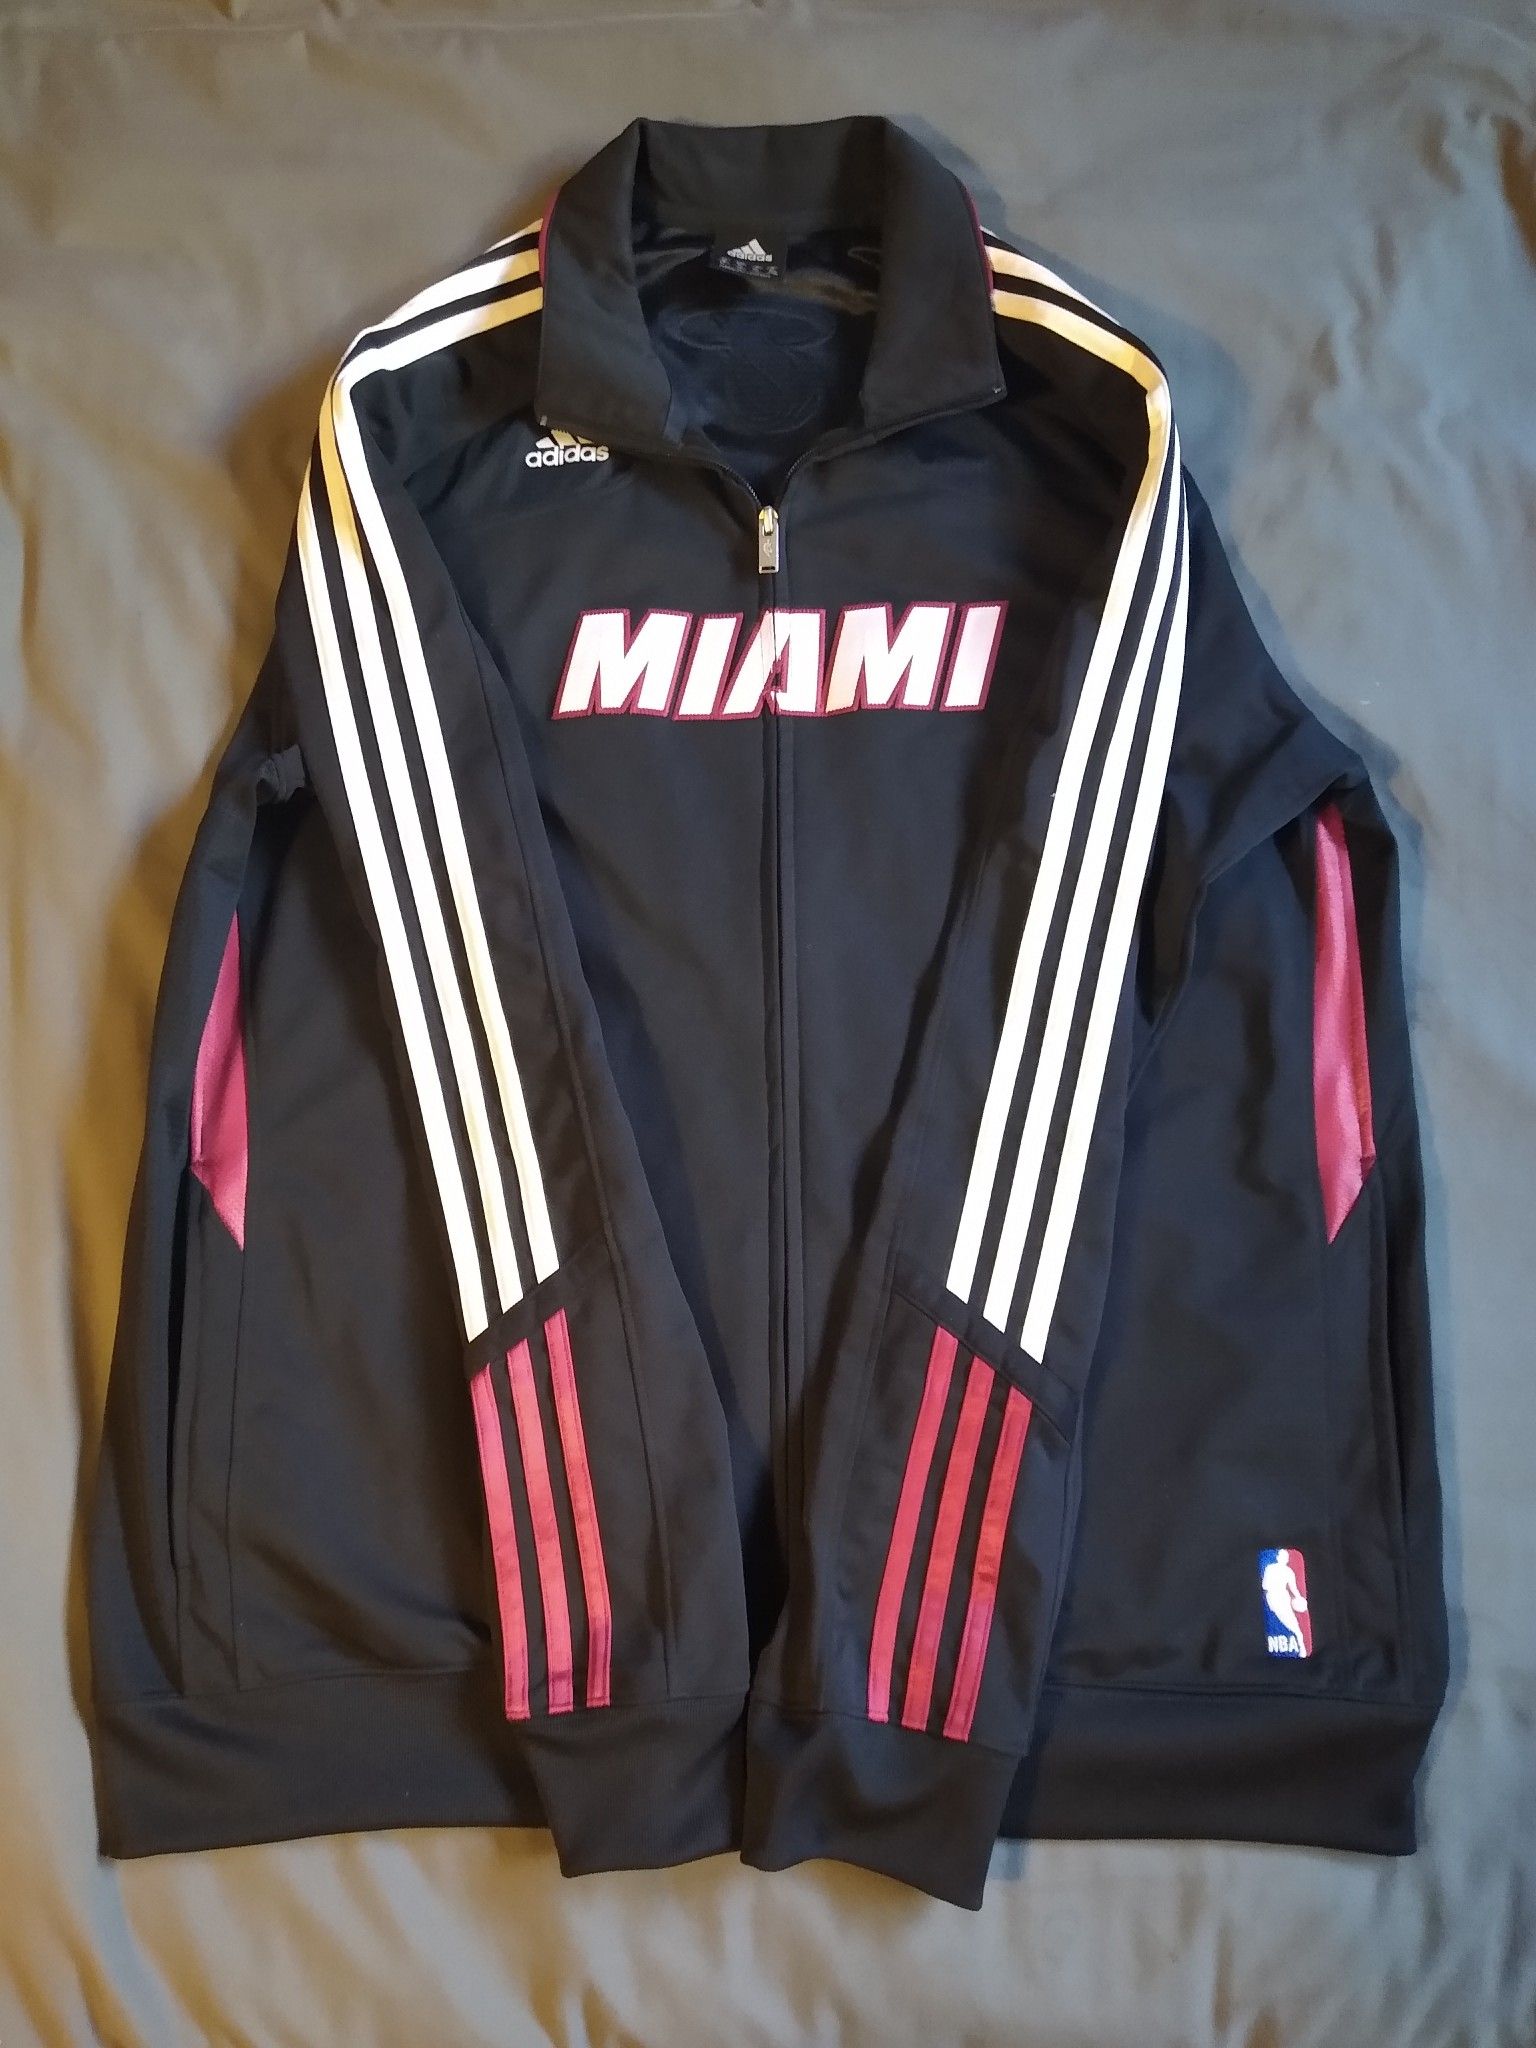 XL Adidas Miami Heat Jacket